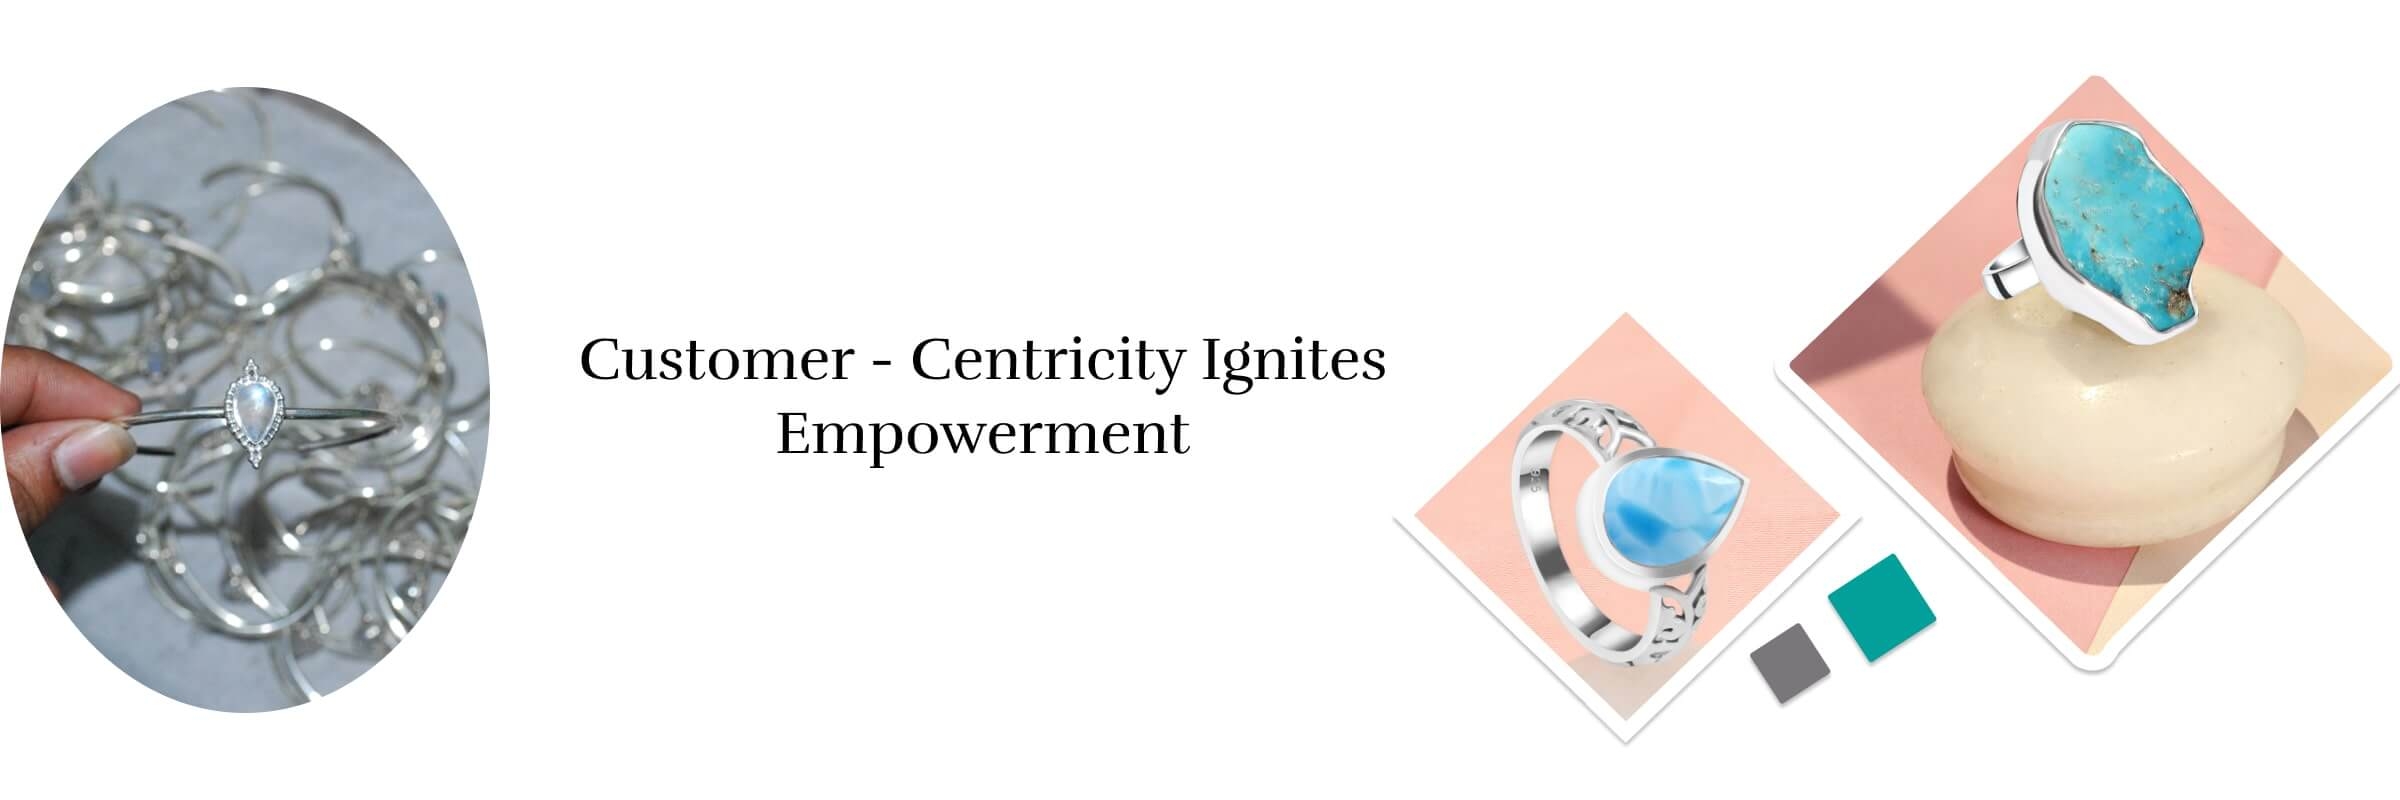 Empowerment through Customer-Centricity